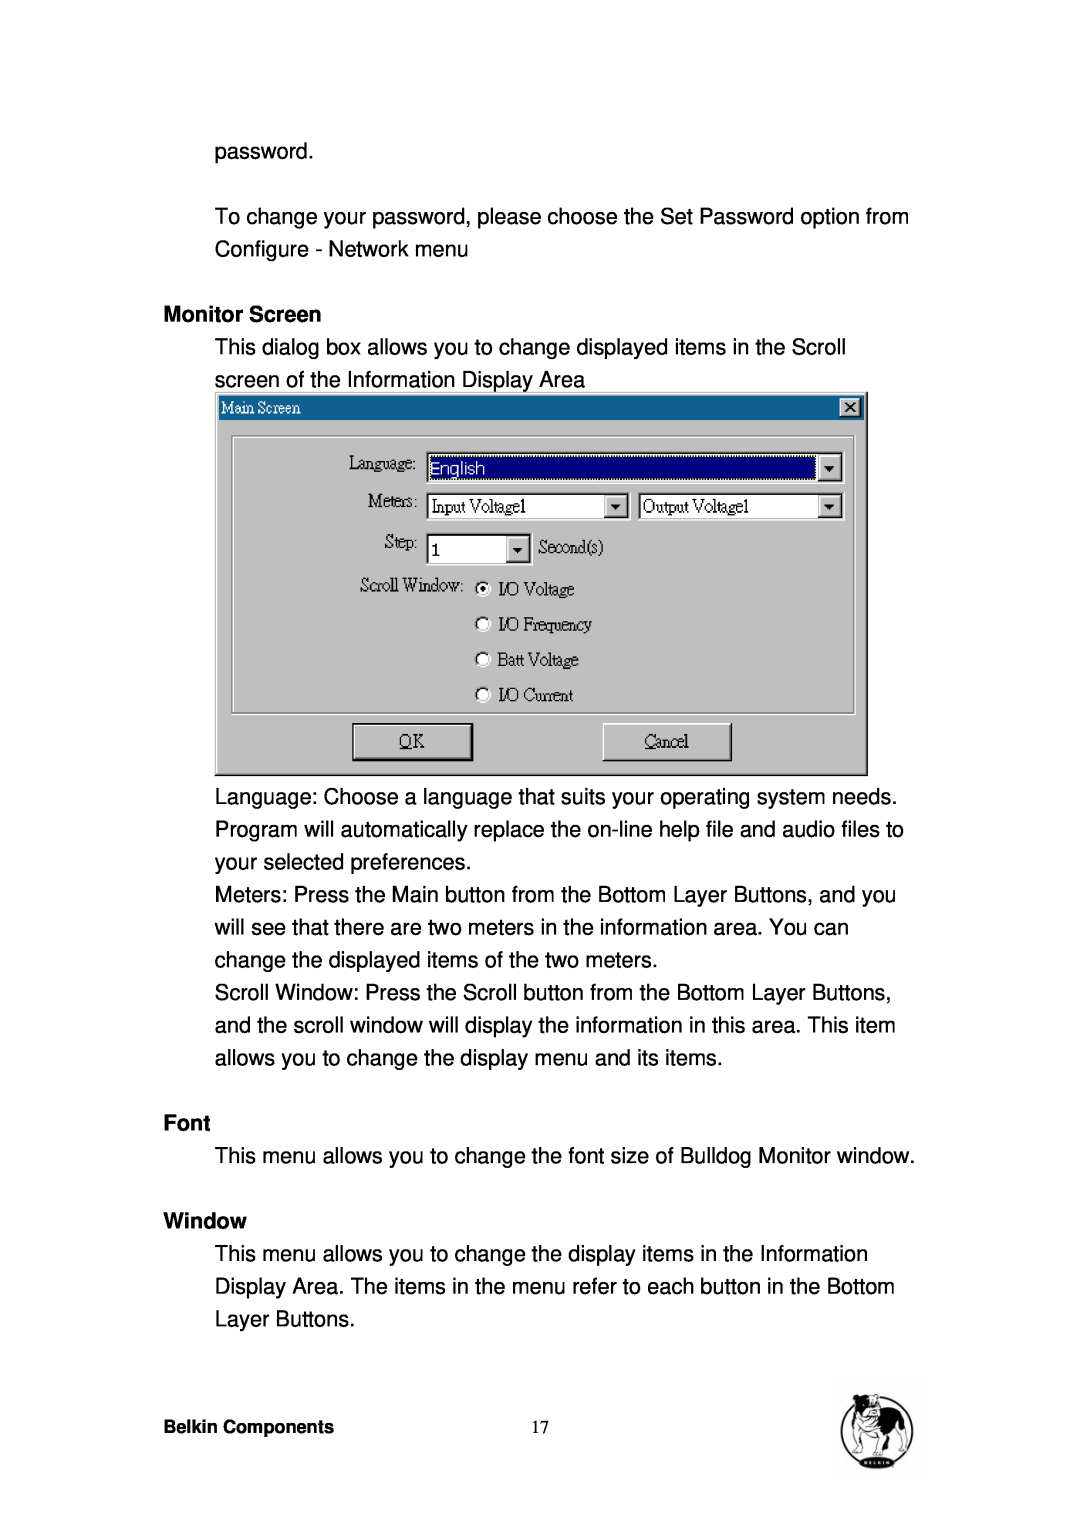 Belkin belkin bulldog plus- shutdown management software for windows user manual Monitor Screen, Font, Window 